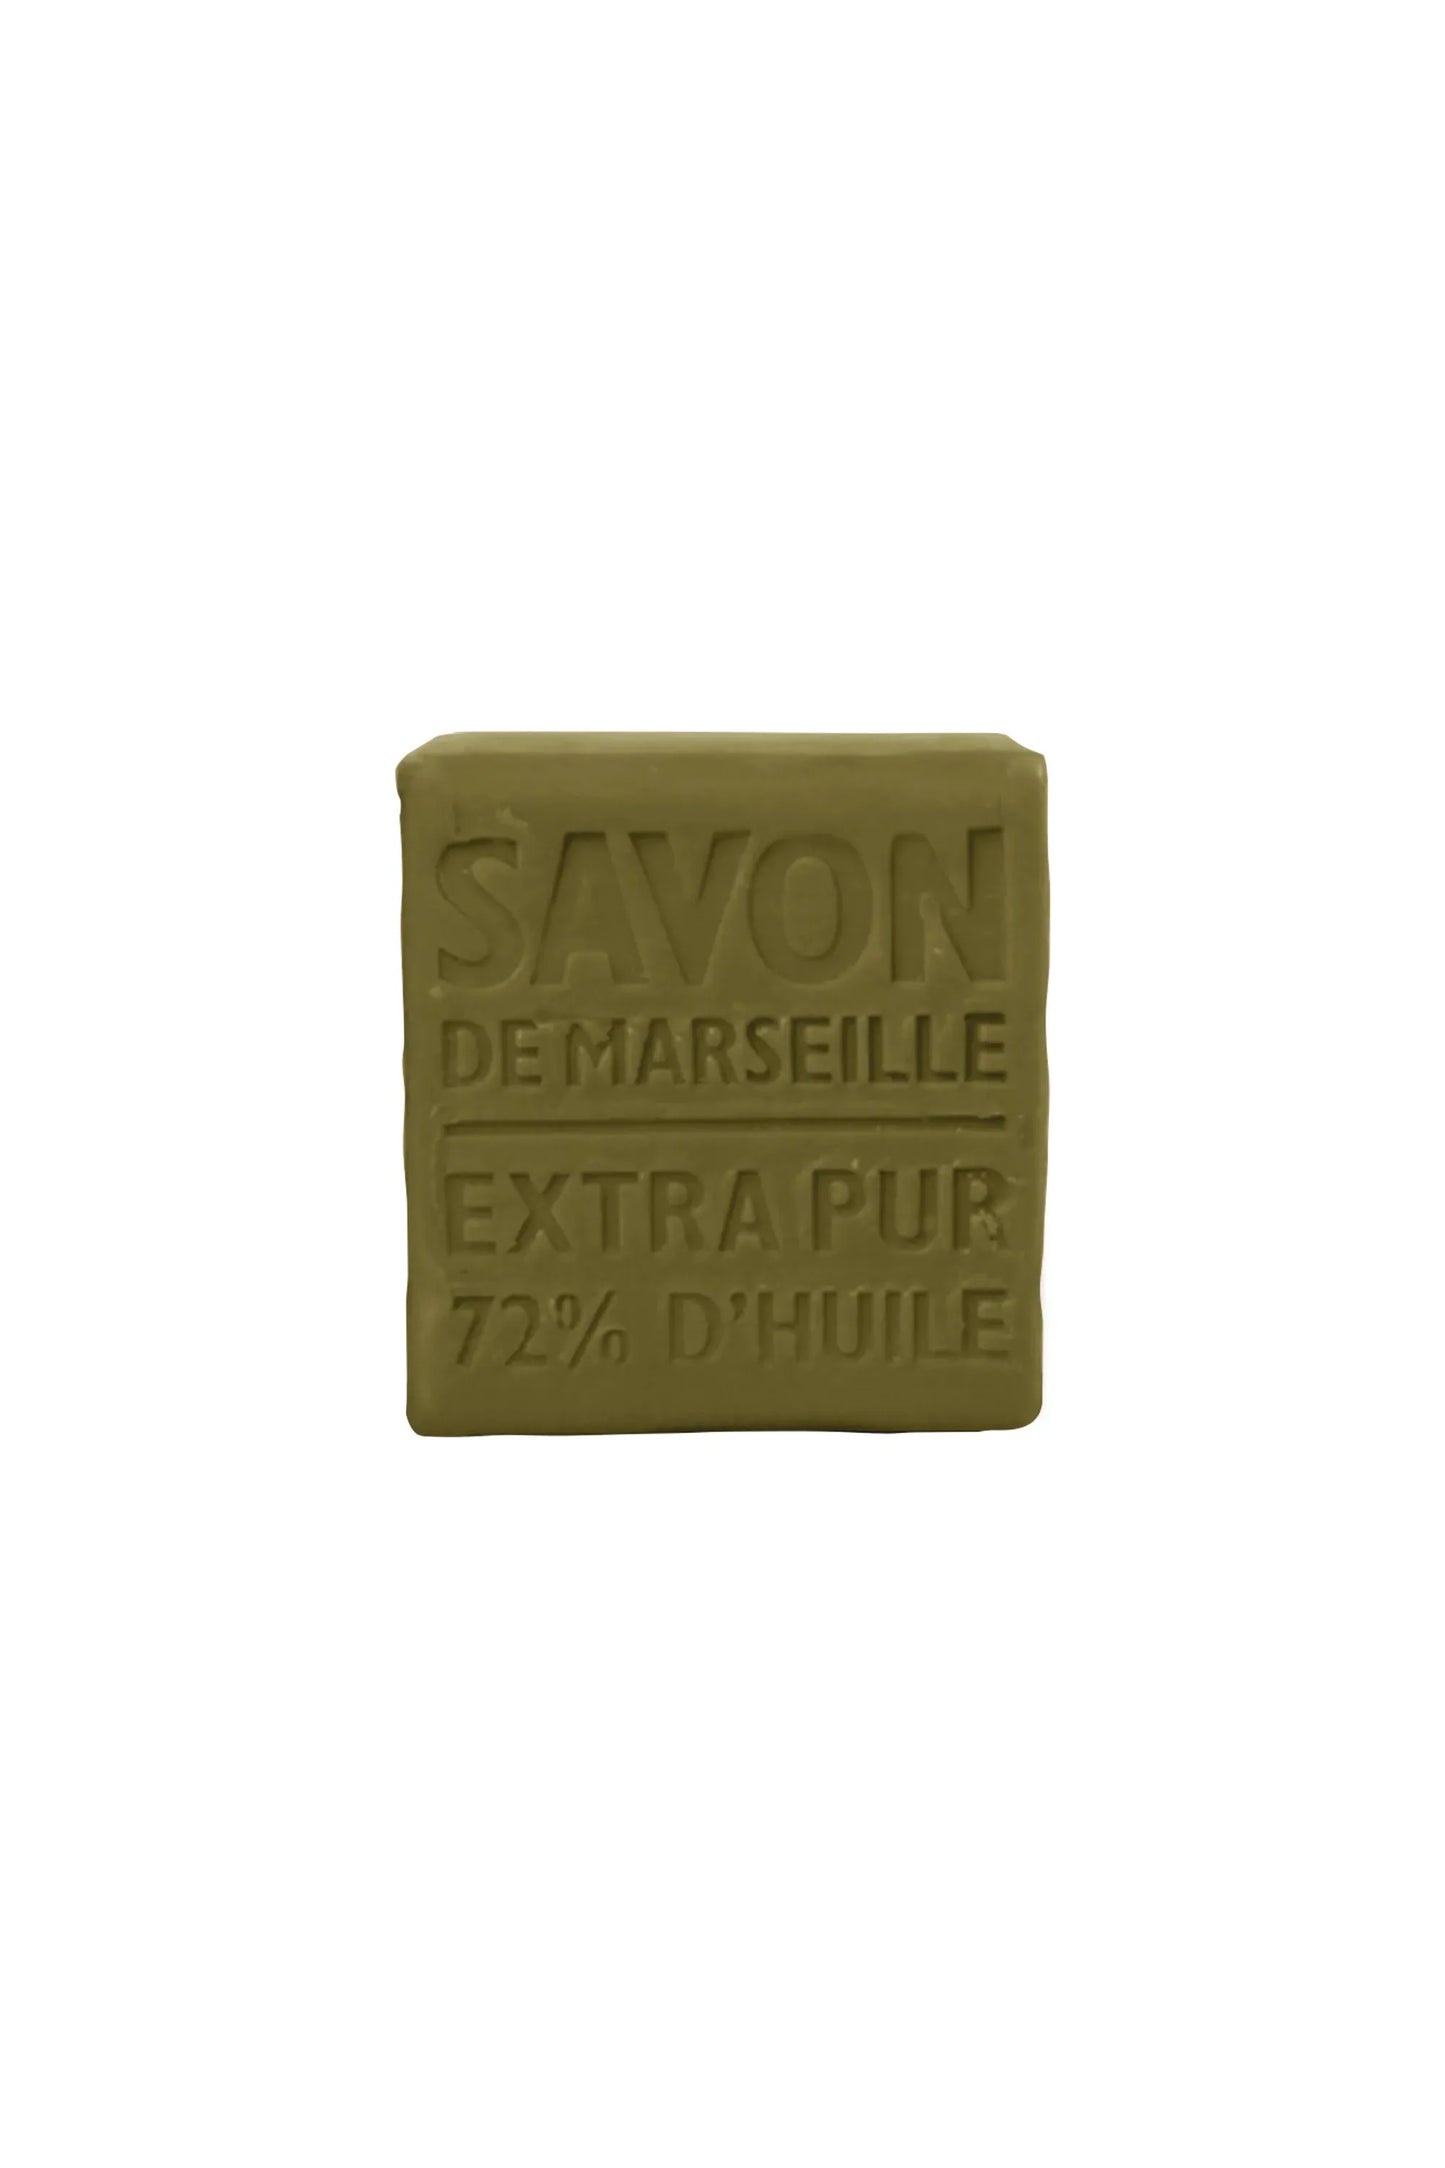 Terra Cube of Marseille - Soap